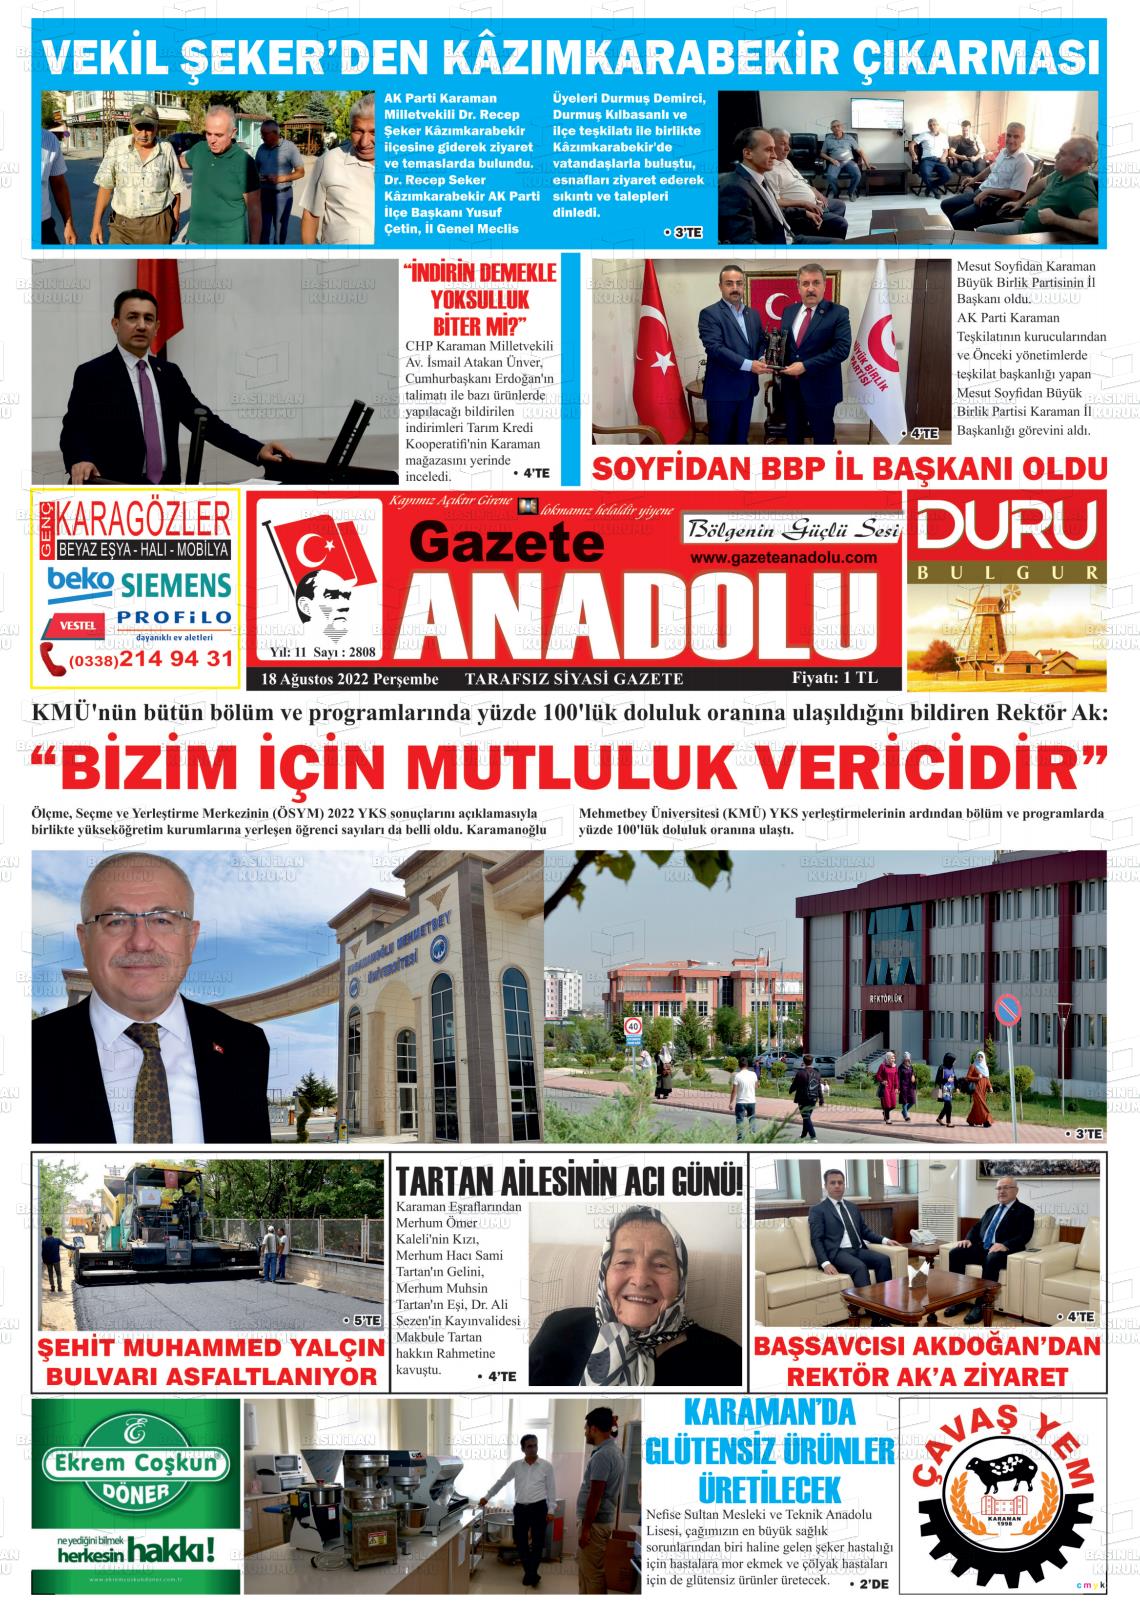 18 Ağustos 2022 Gazete Anadolu Gazete Manşeti